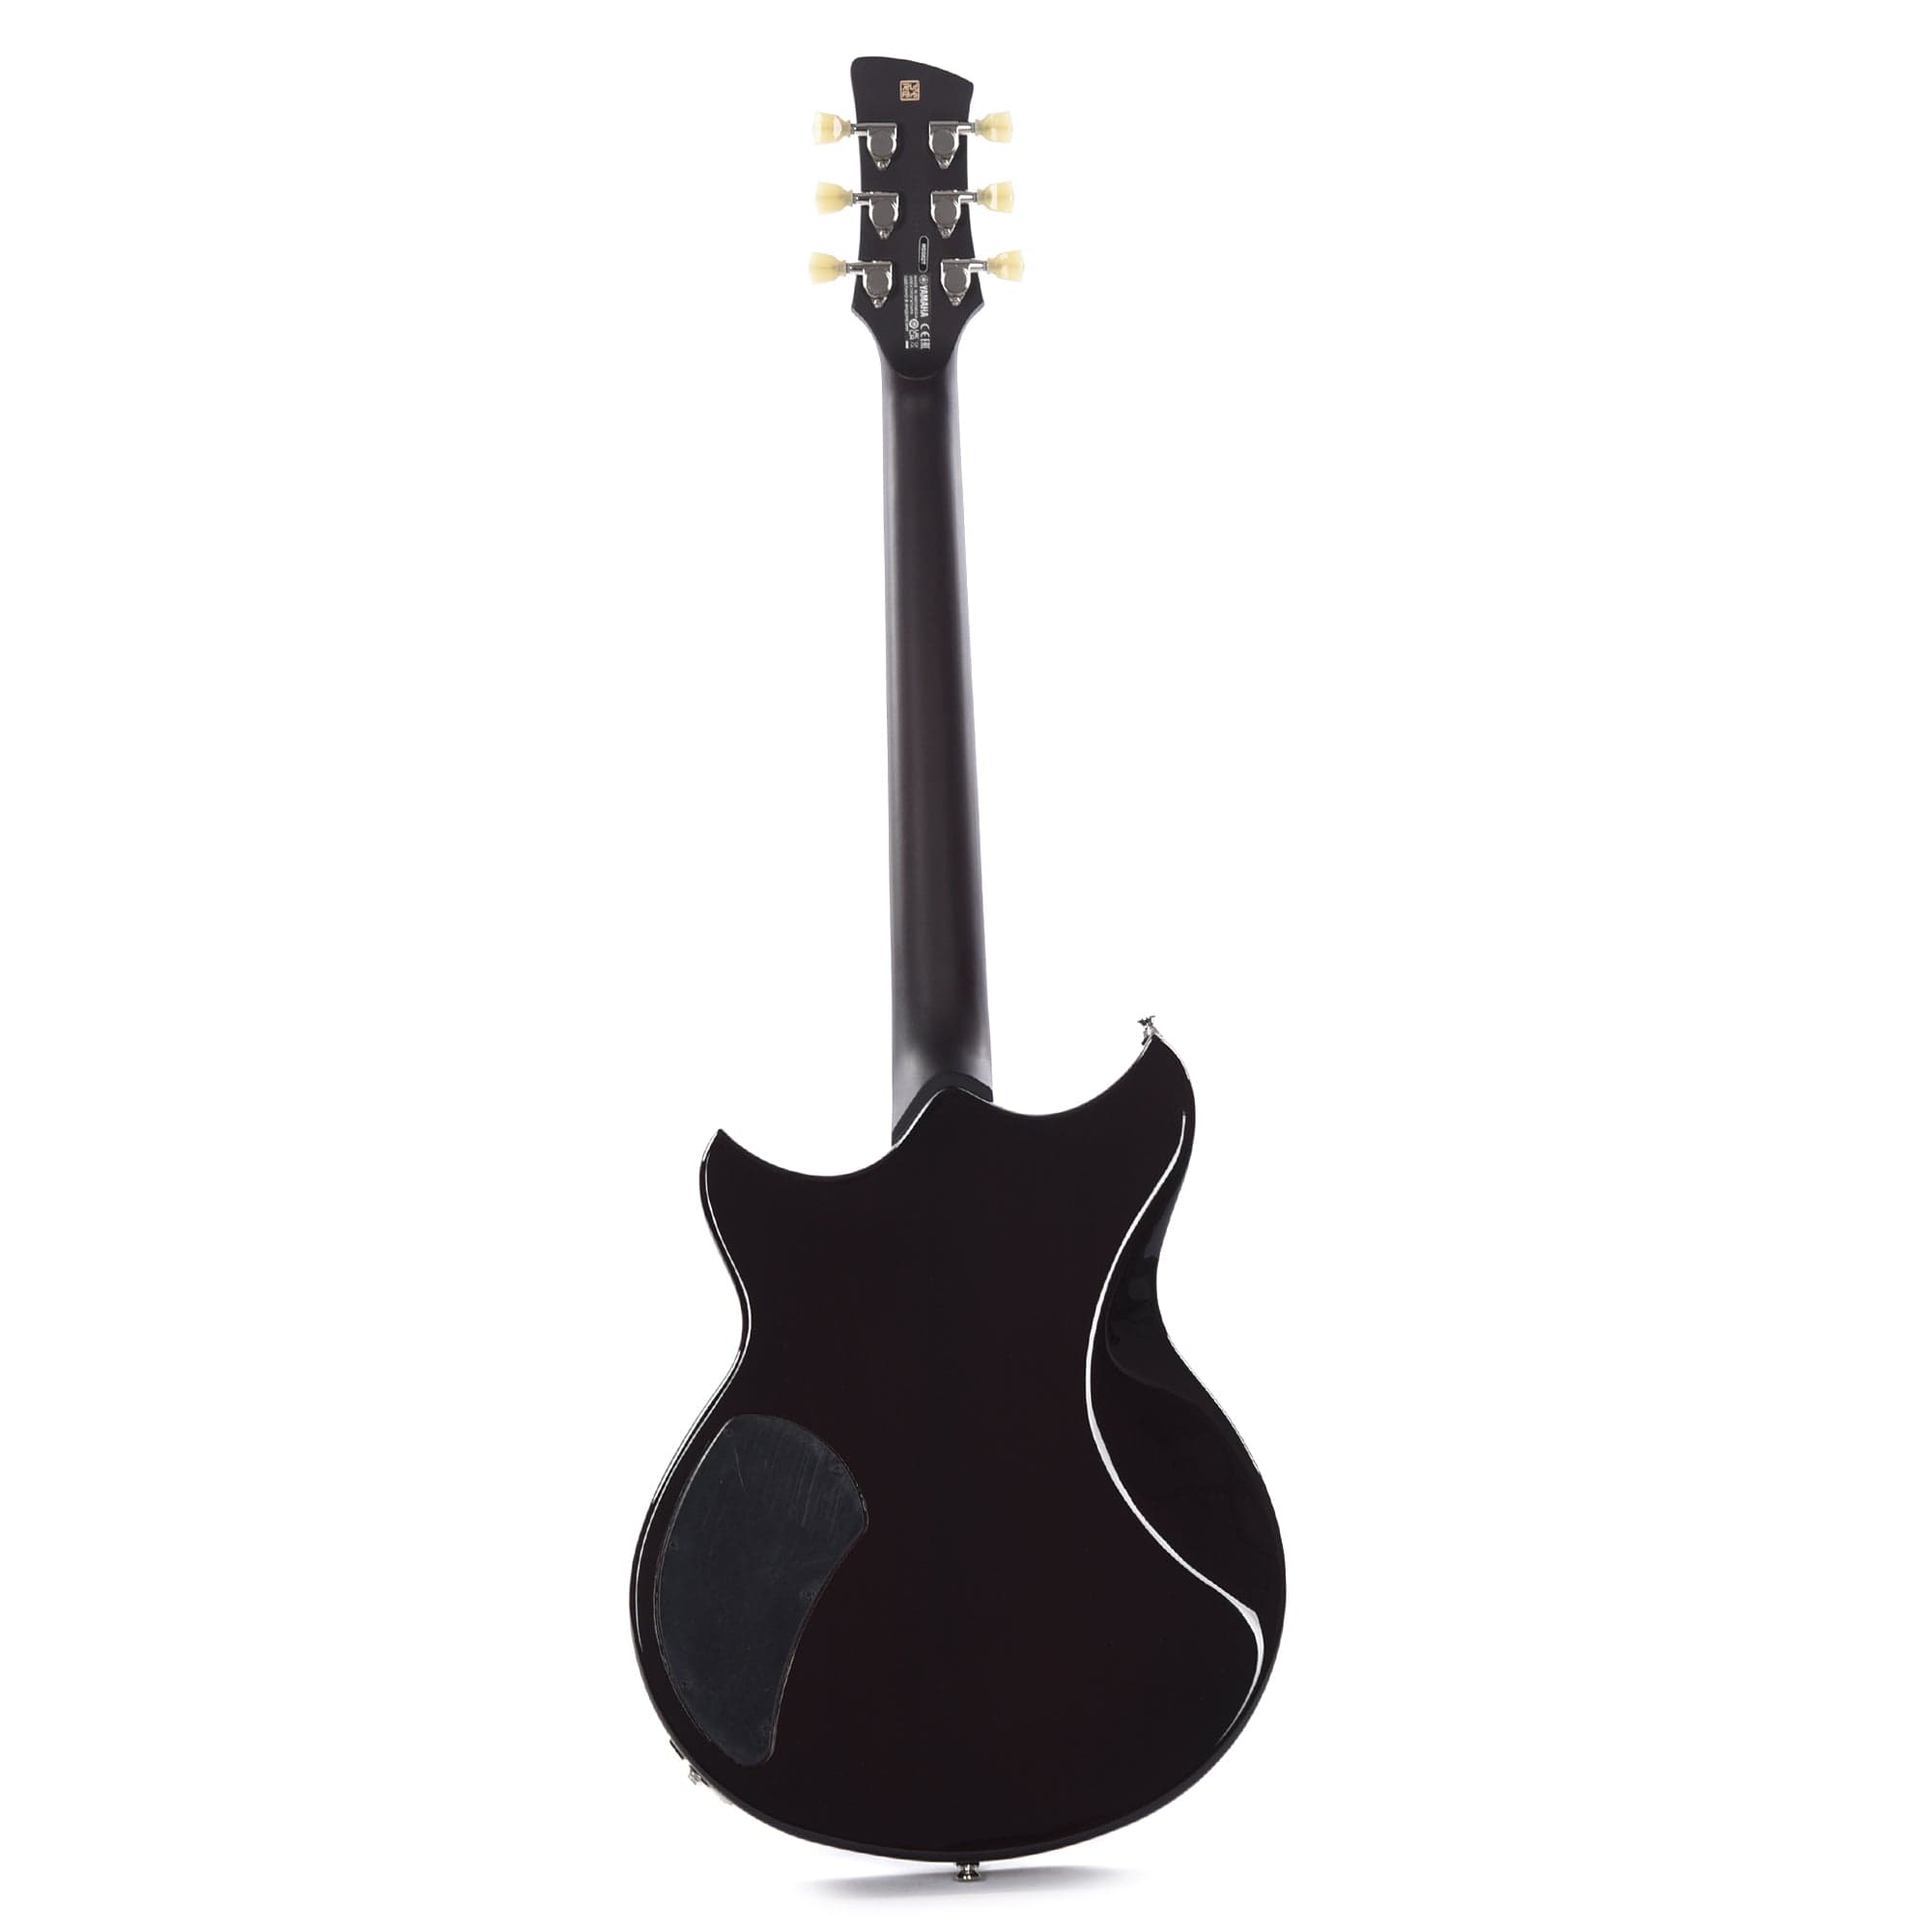 Yamaha Revstar Standard RSS02T Swift Blue Electric Guitars / Solid Body